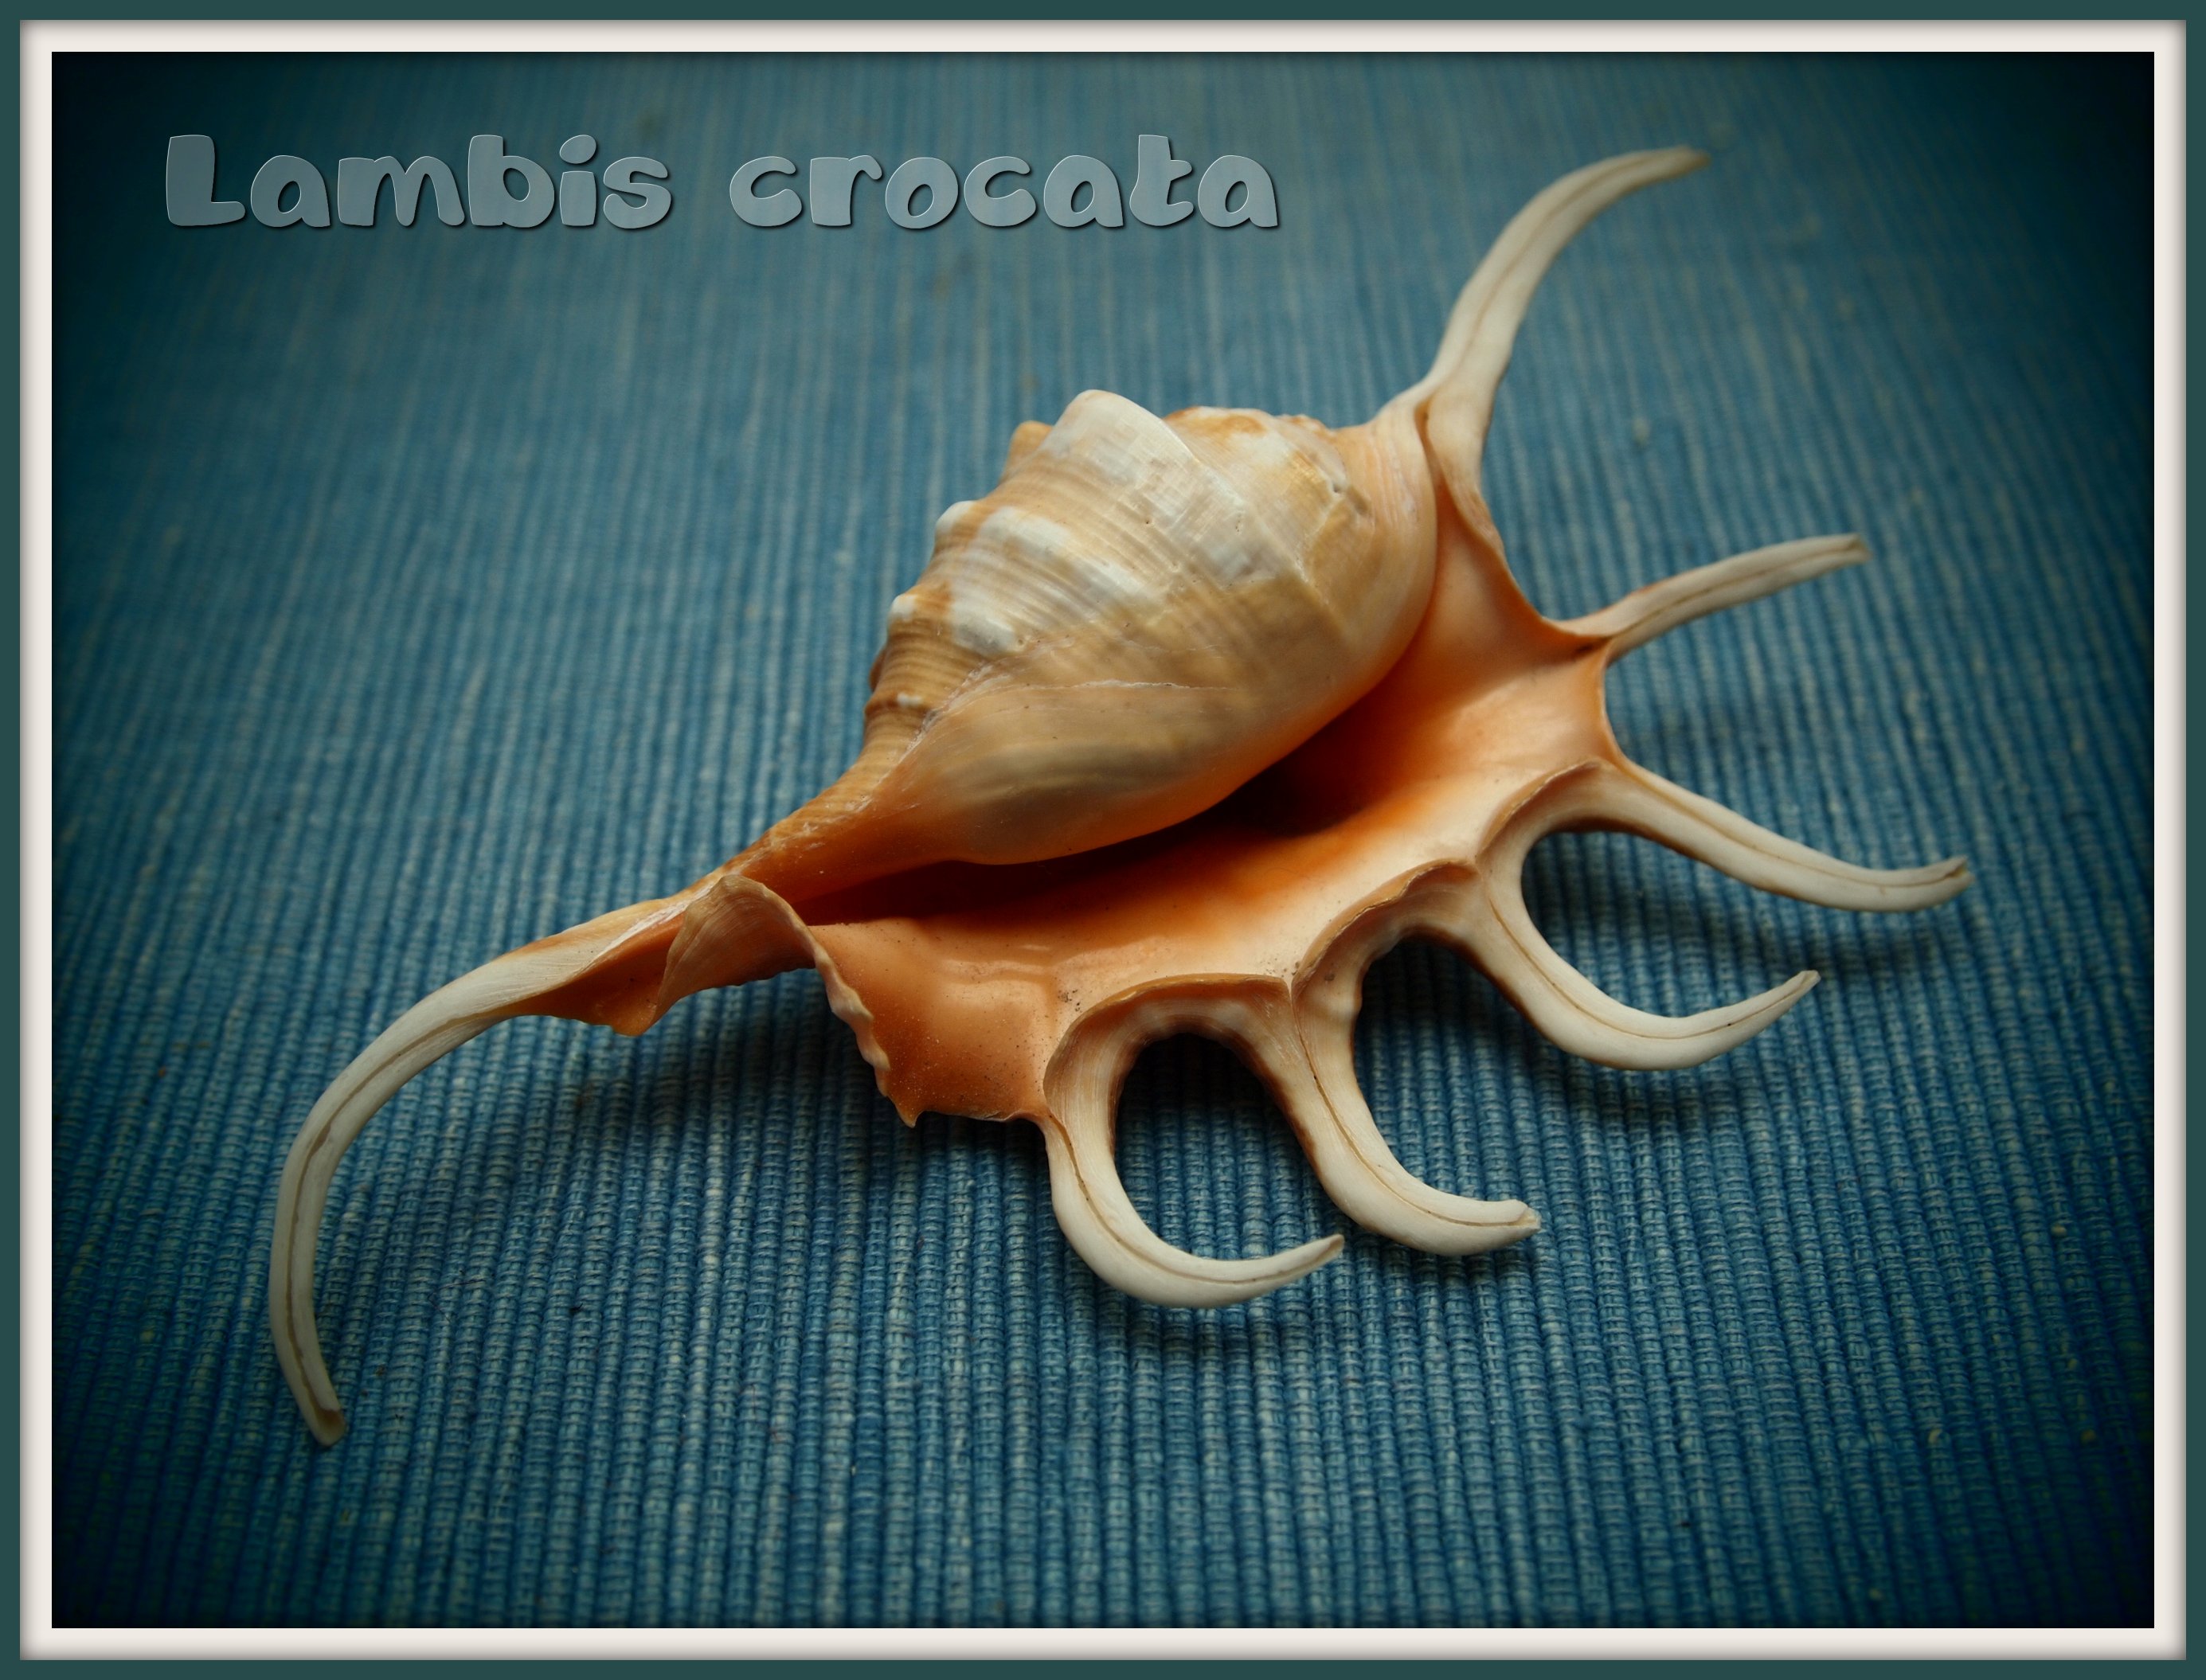 Lambis crocata (6640457193)